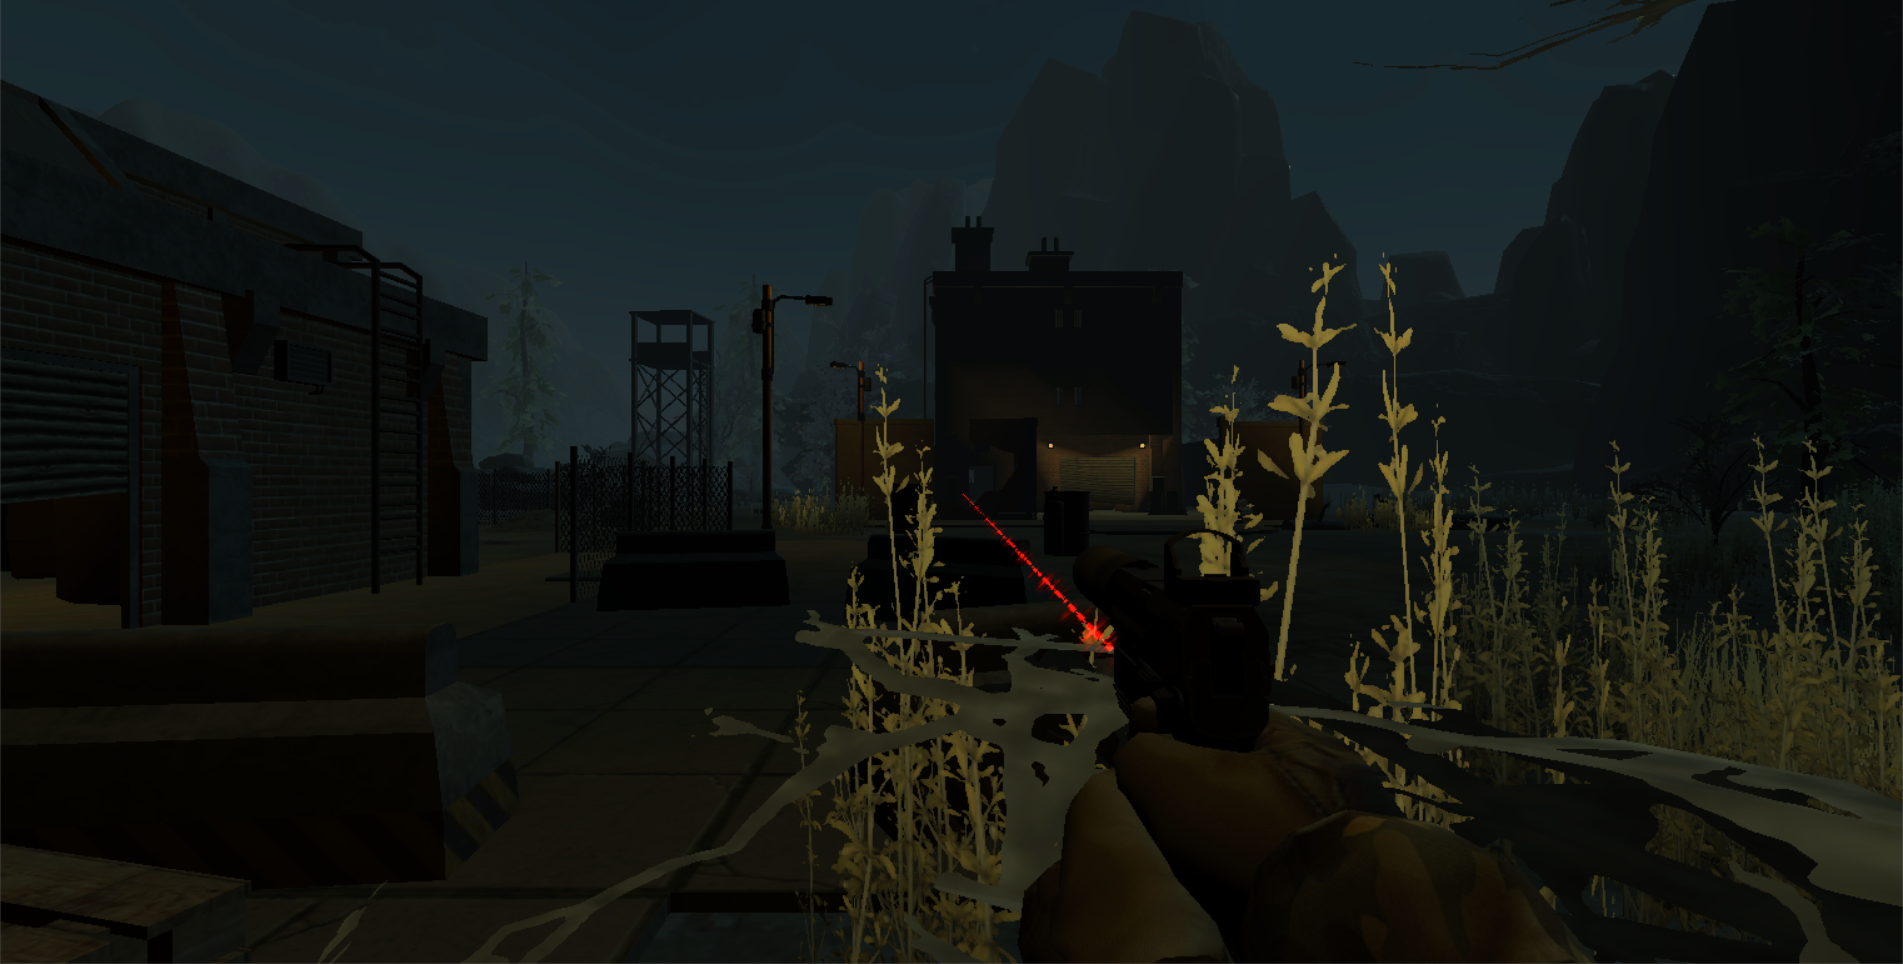 Screenshot 1 of BattleCore (មិនទាន់ចេញផ្សាយ) 0.85